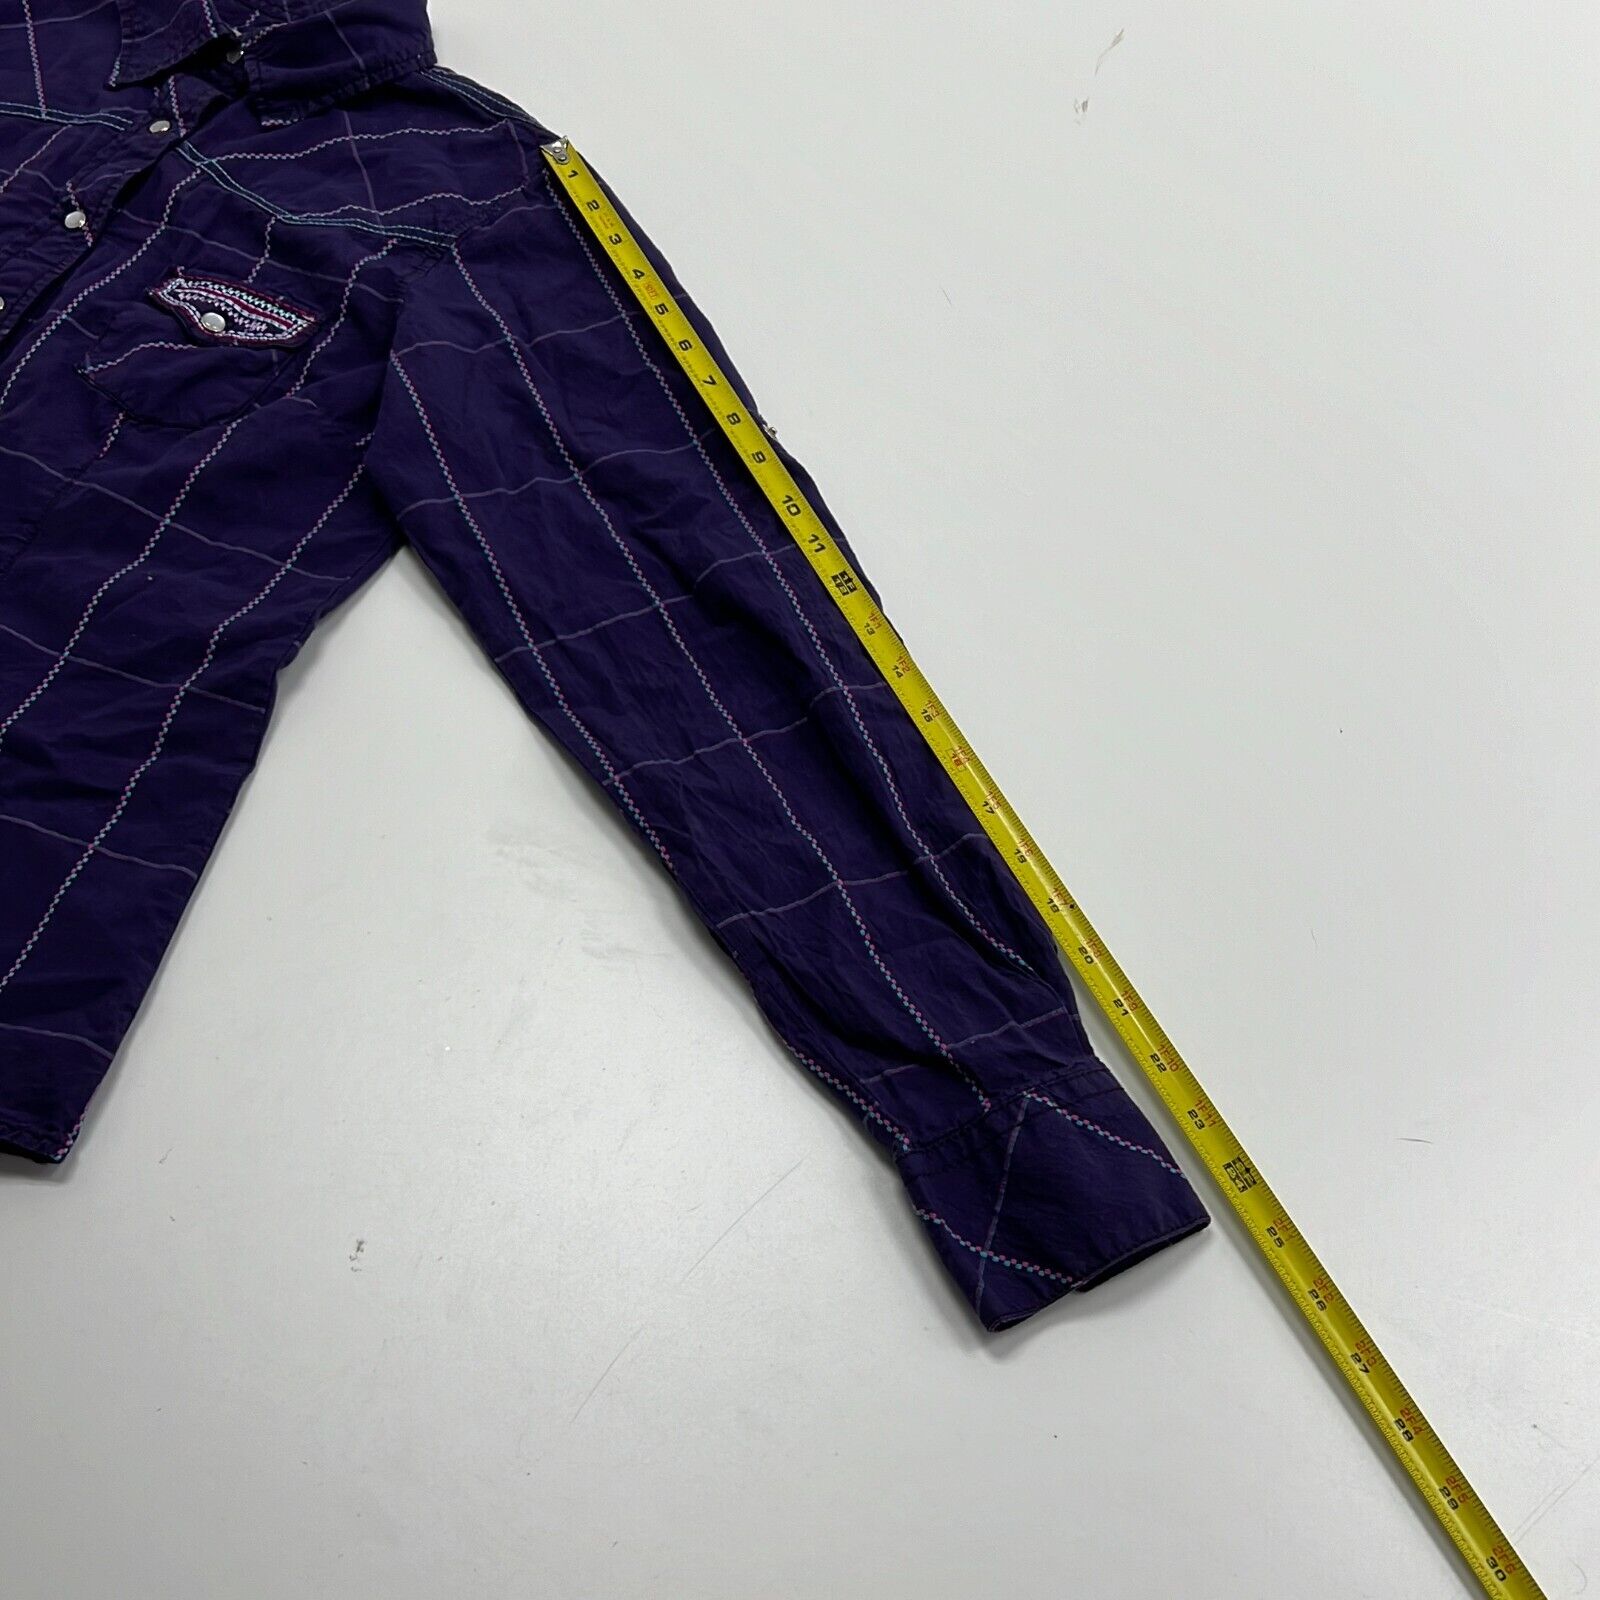 Cowgirl Legend Women’s Purple Long Sleeve Collared Pockets Button-Up Shirt Sz L